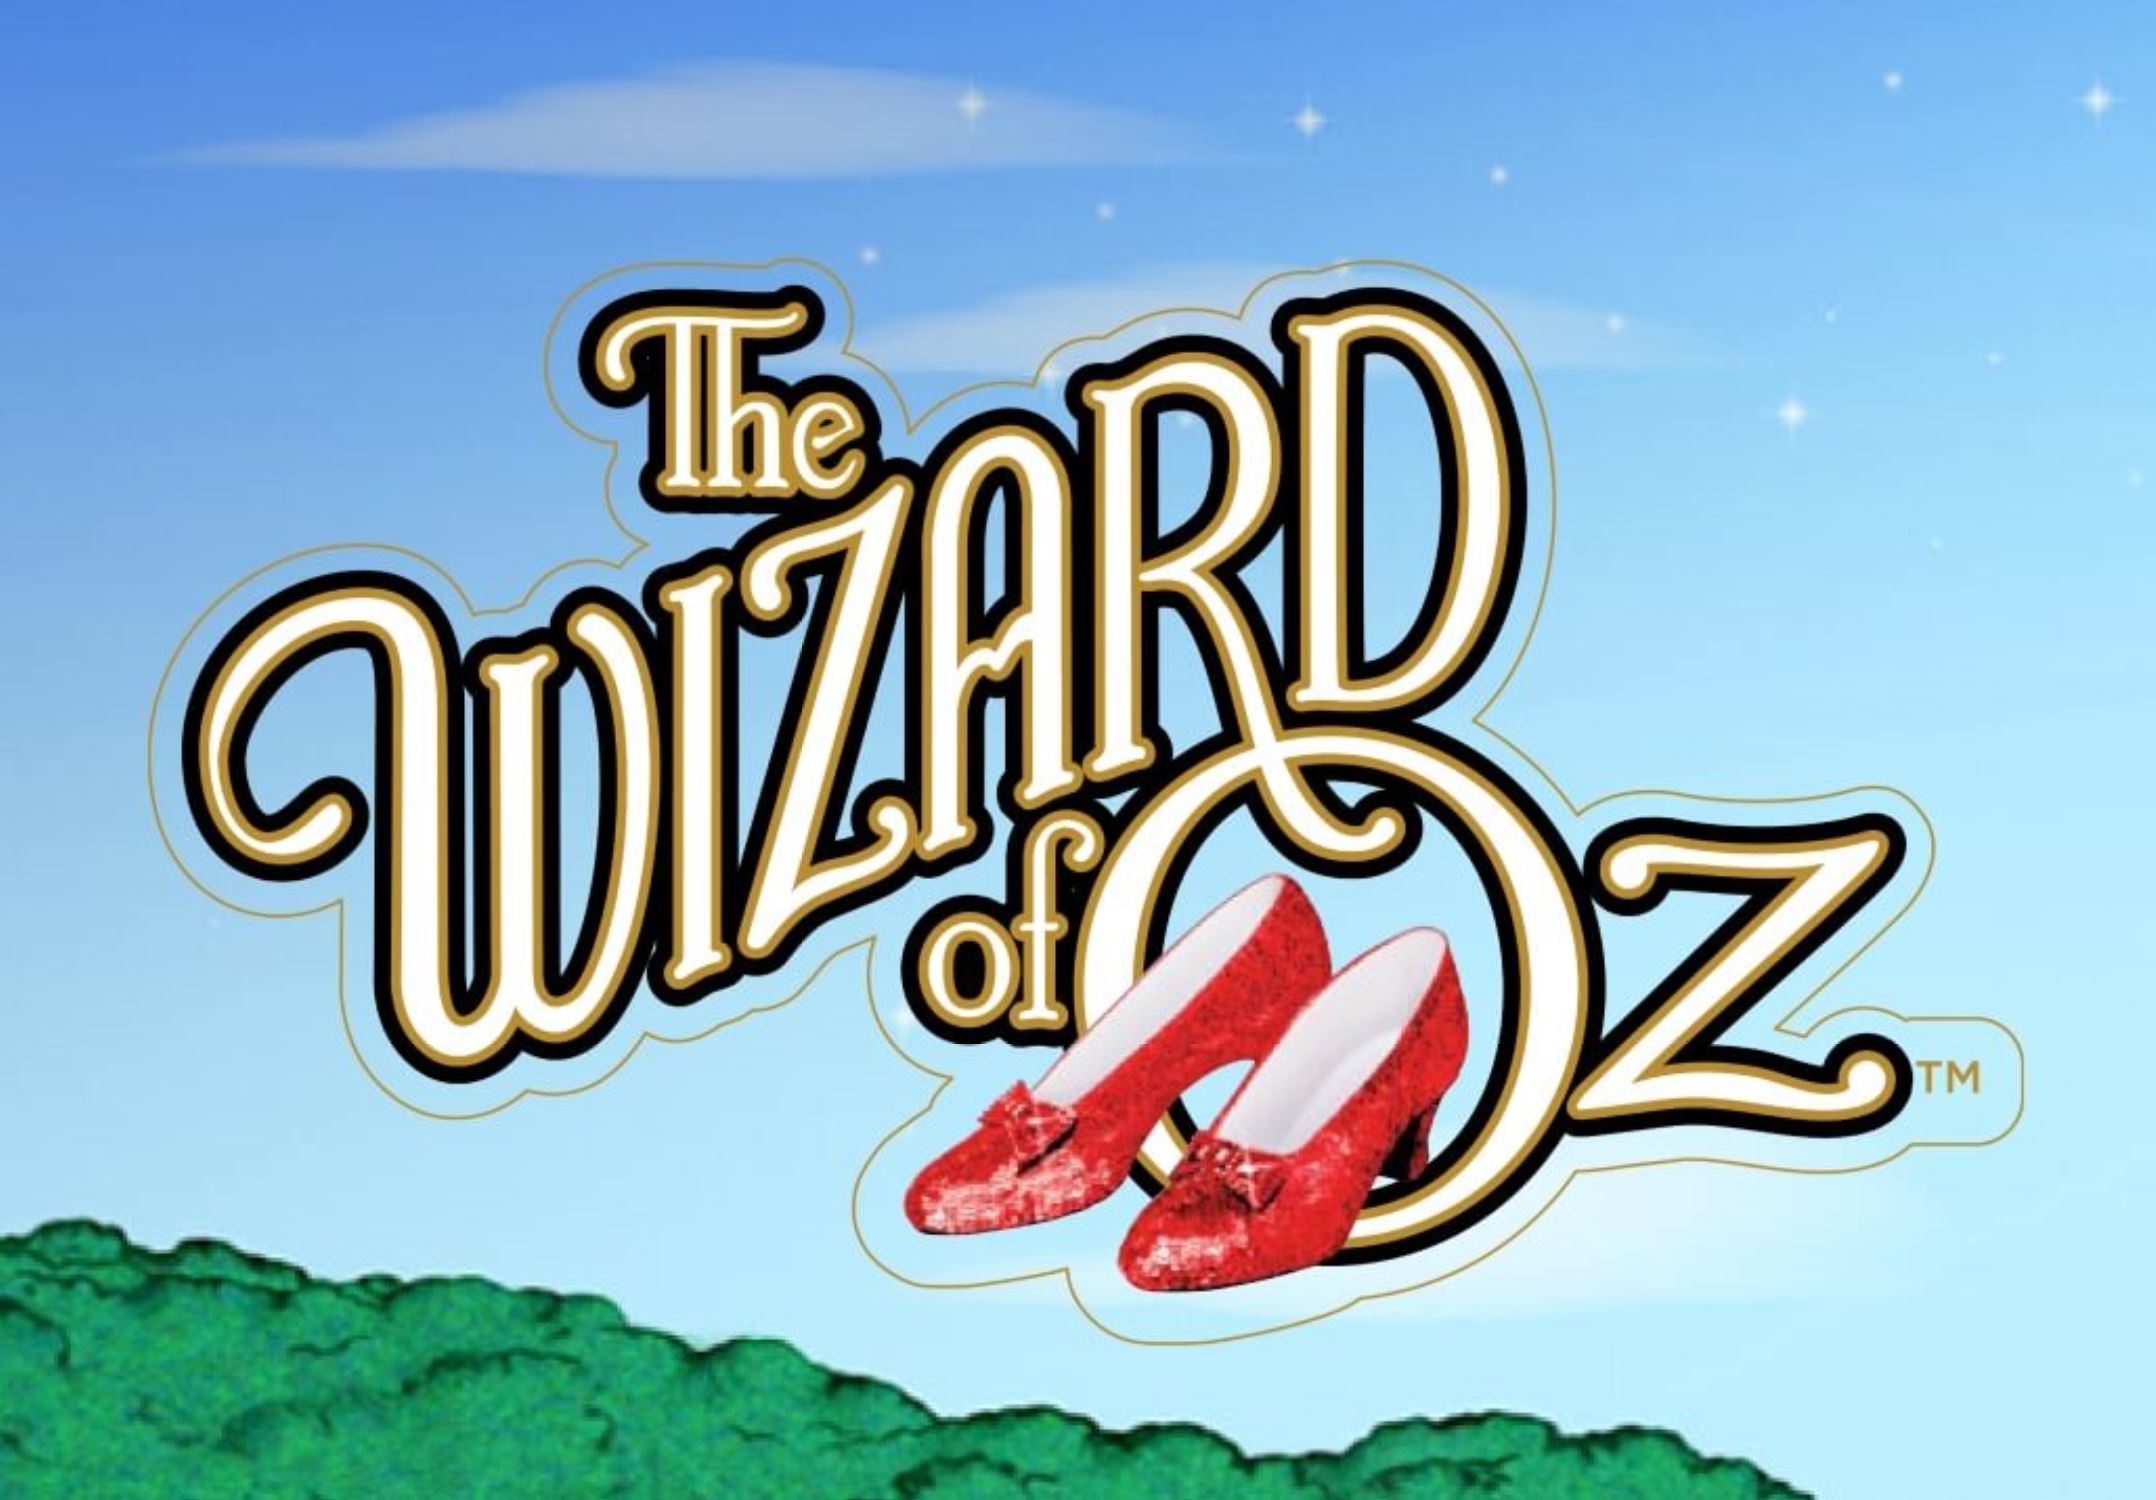 Wizard of Oz Slots